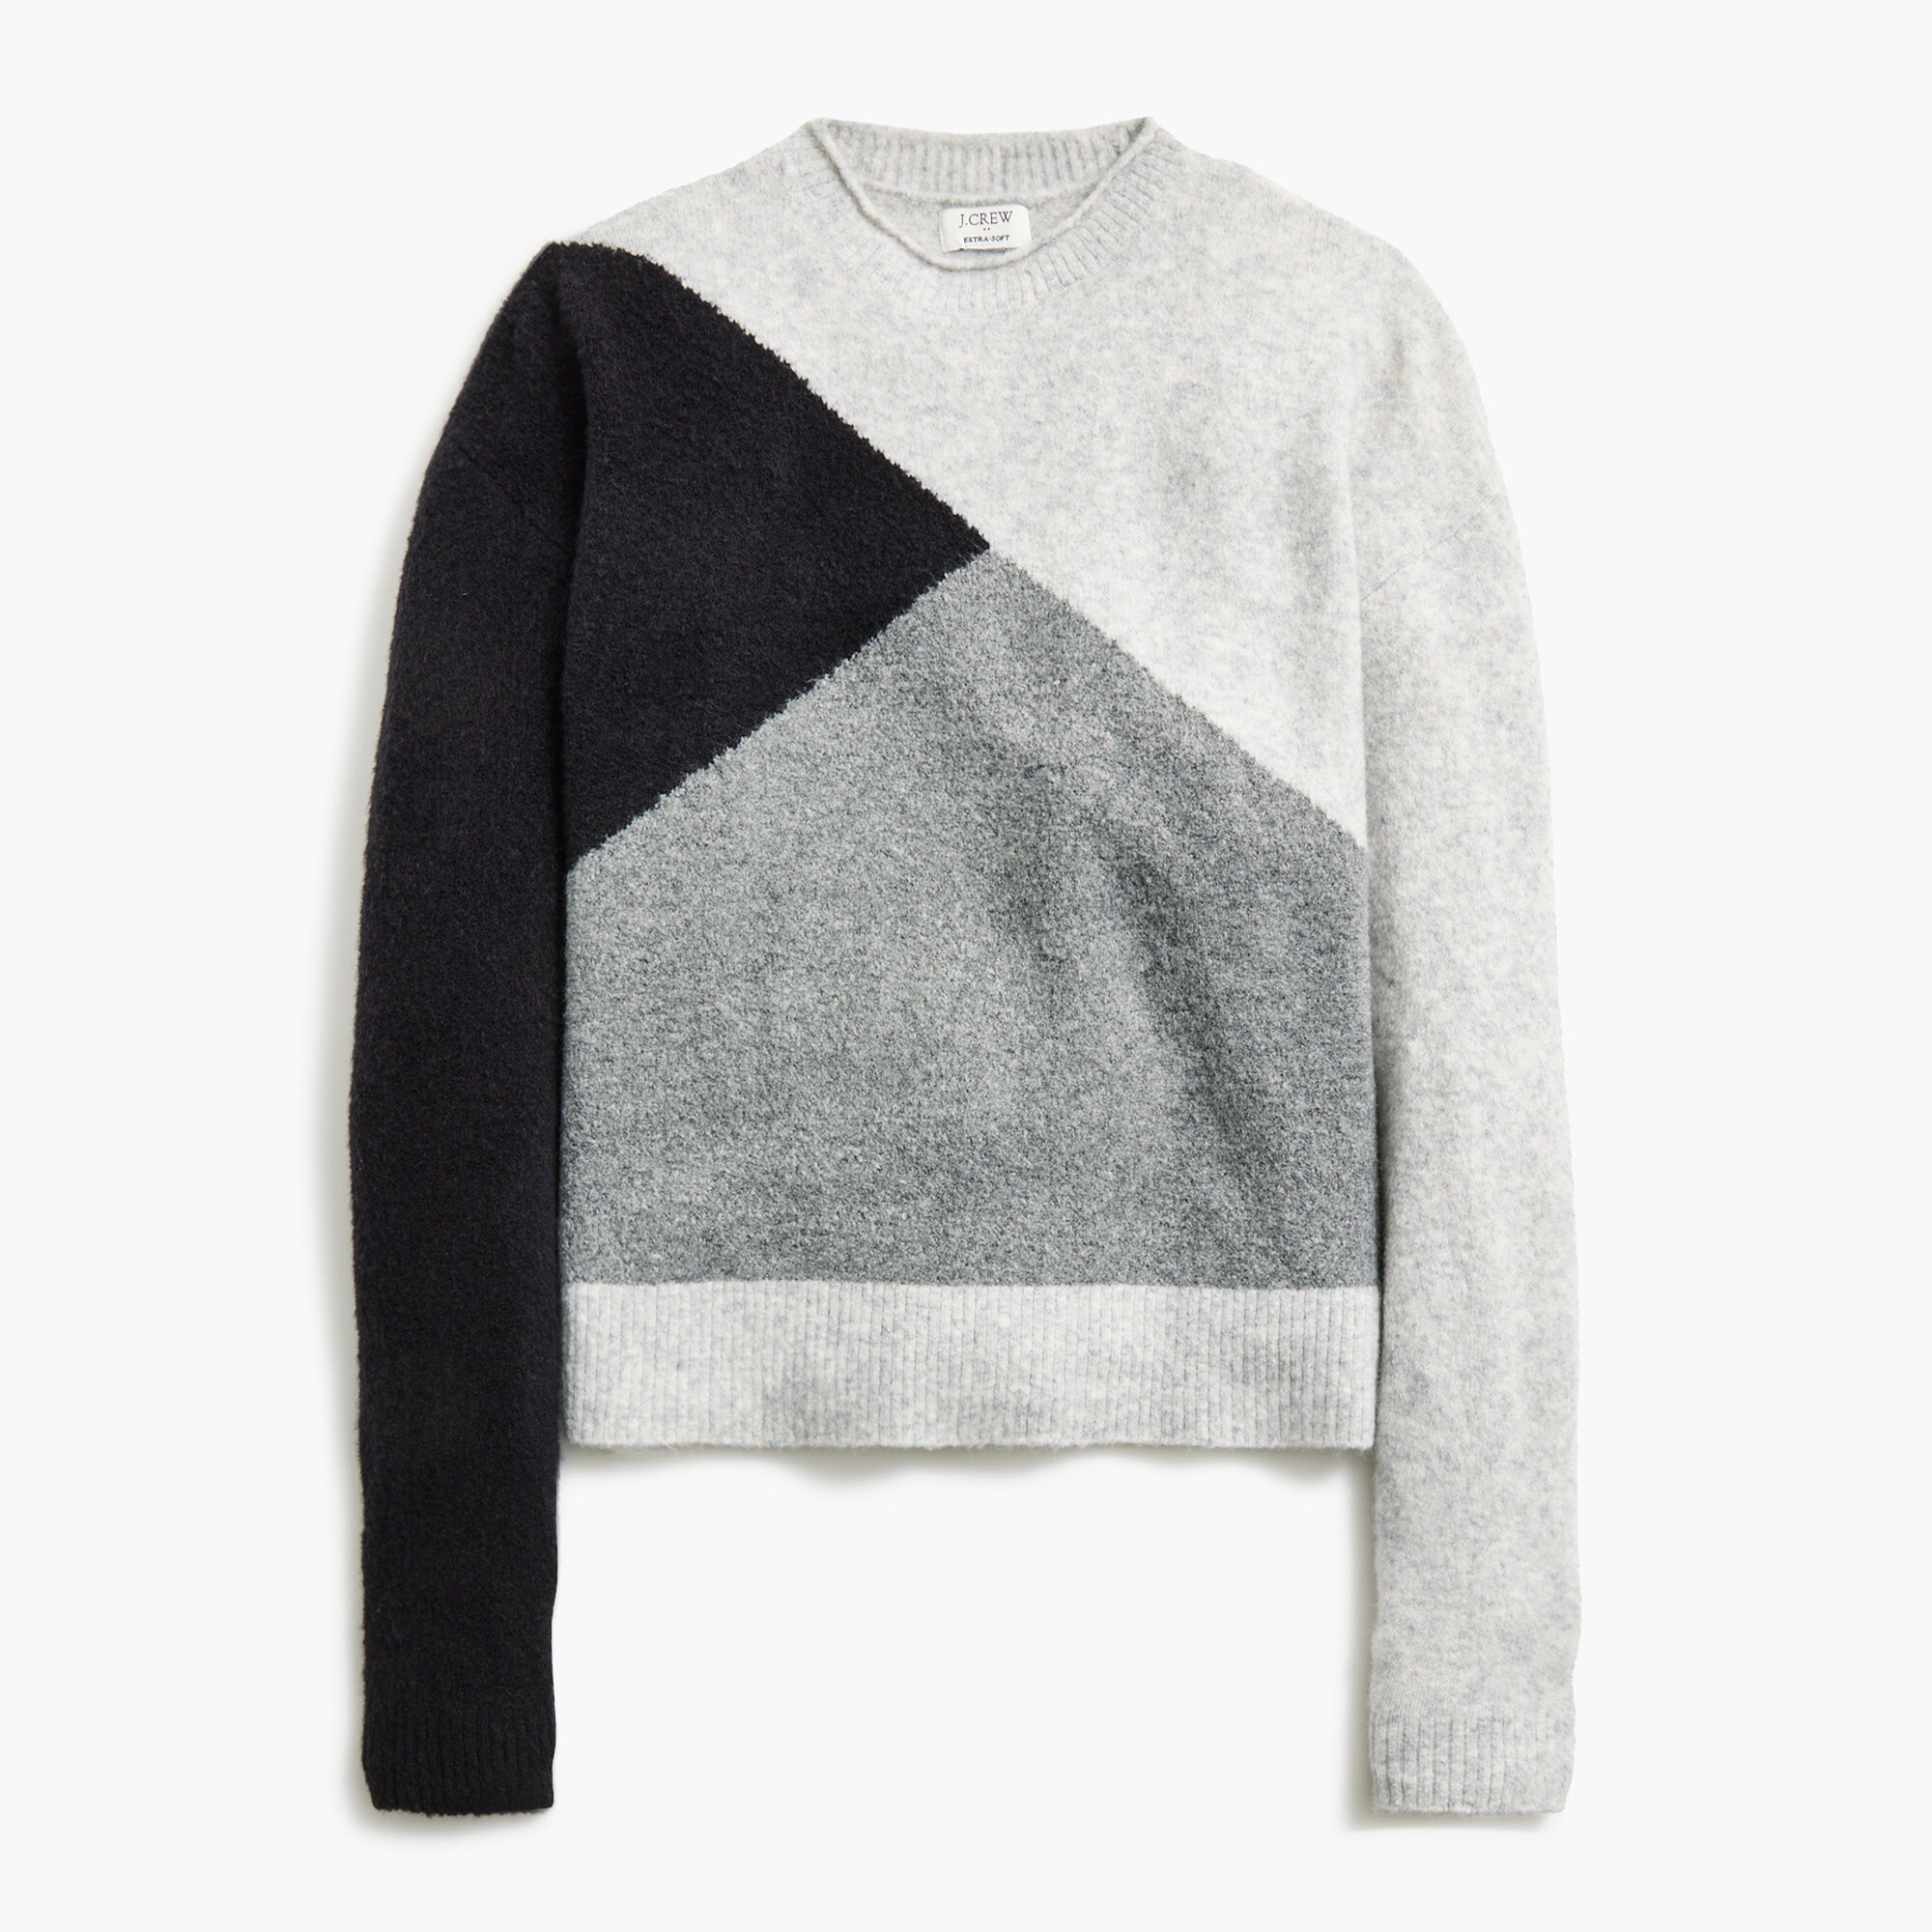  Colorblock mockneck sweater in extra-soft yarn